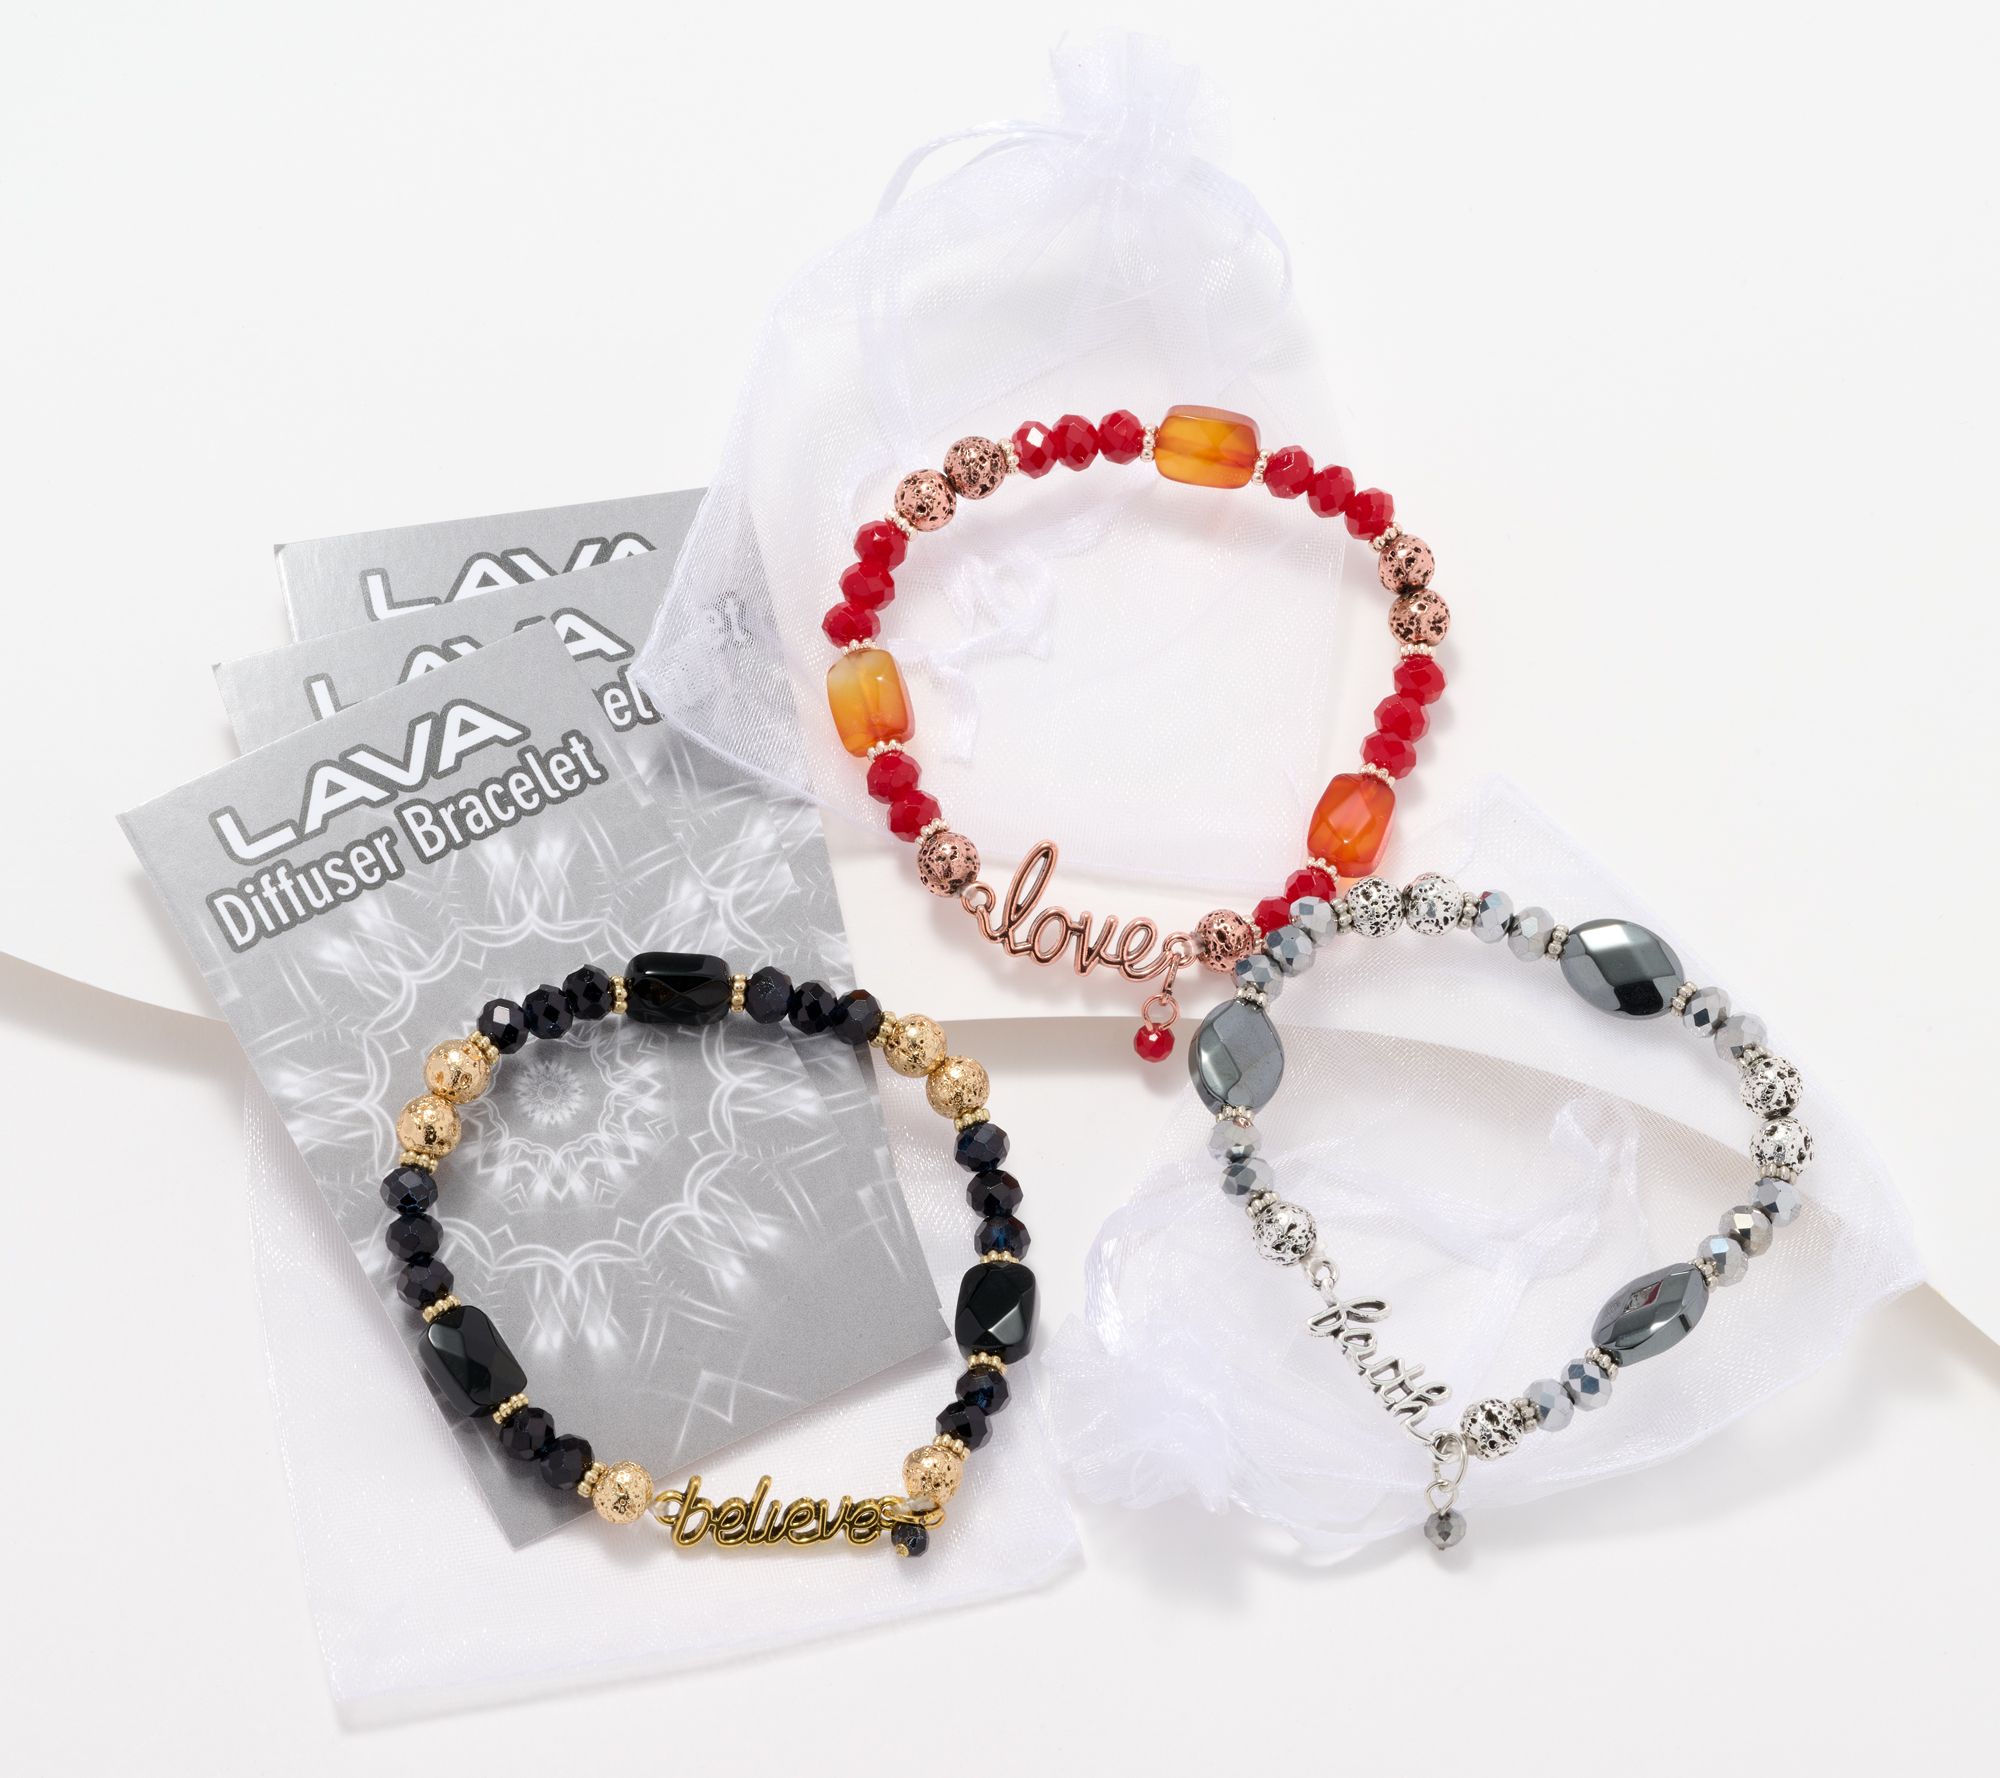 As Is S/4 Lava Bracelets w/ Gemstones & Inspiration Charm in Bag 